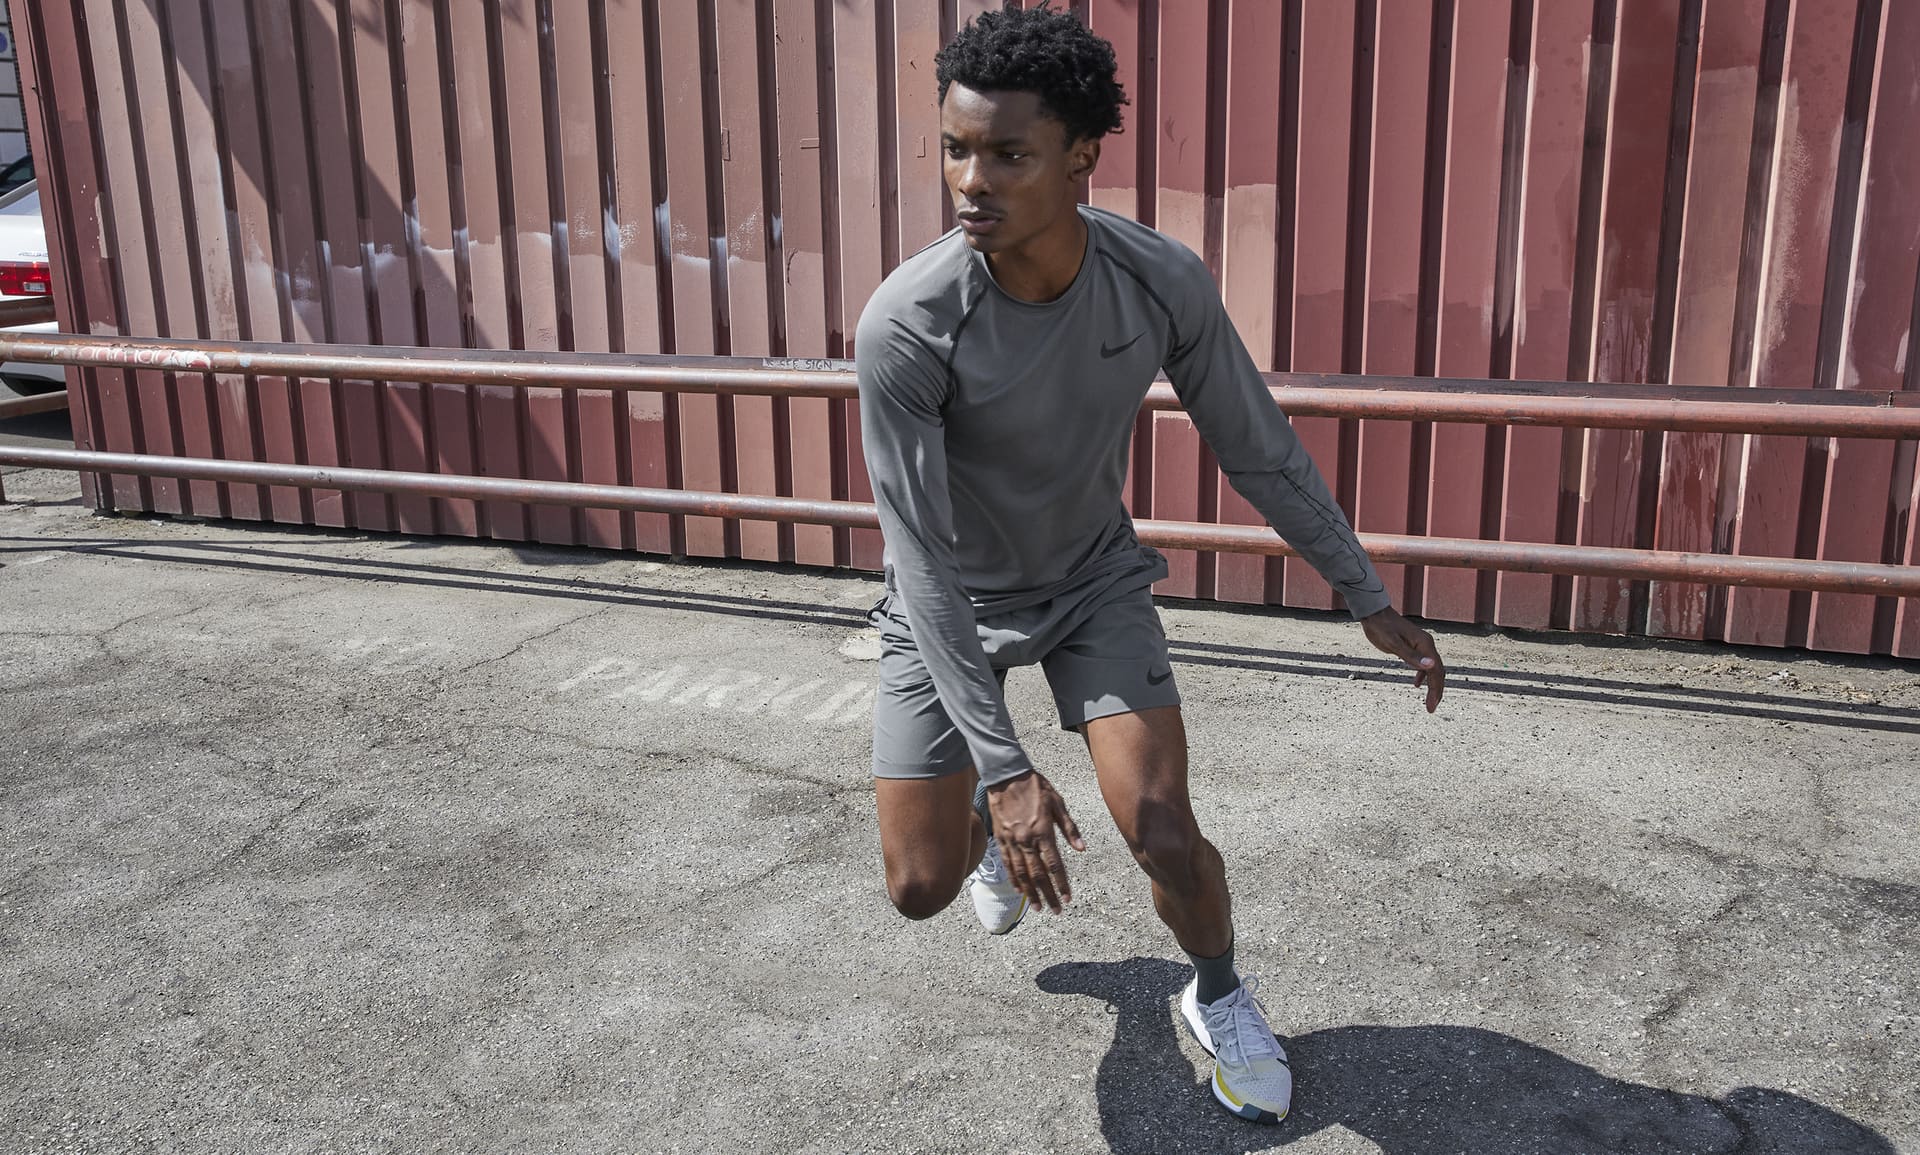 paracaídas Aspirar aprobar Nike Pro Dri-FIT Men's Slim Fit Long-Sleeve Top. Nike.com